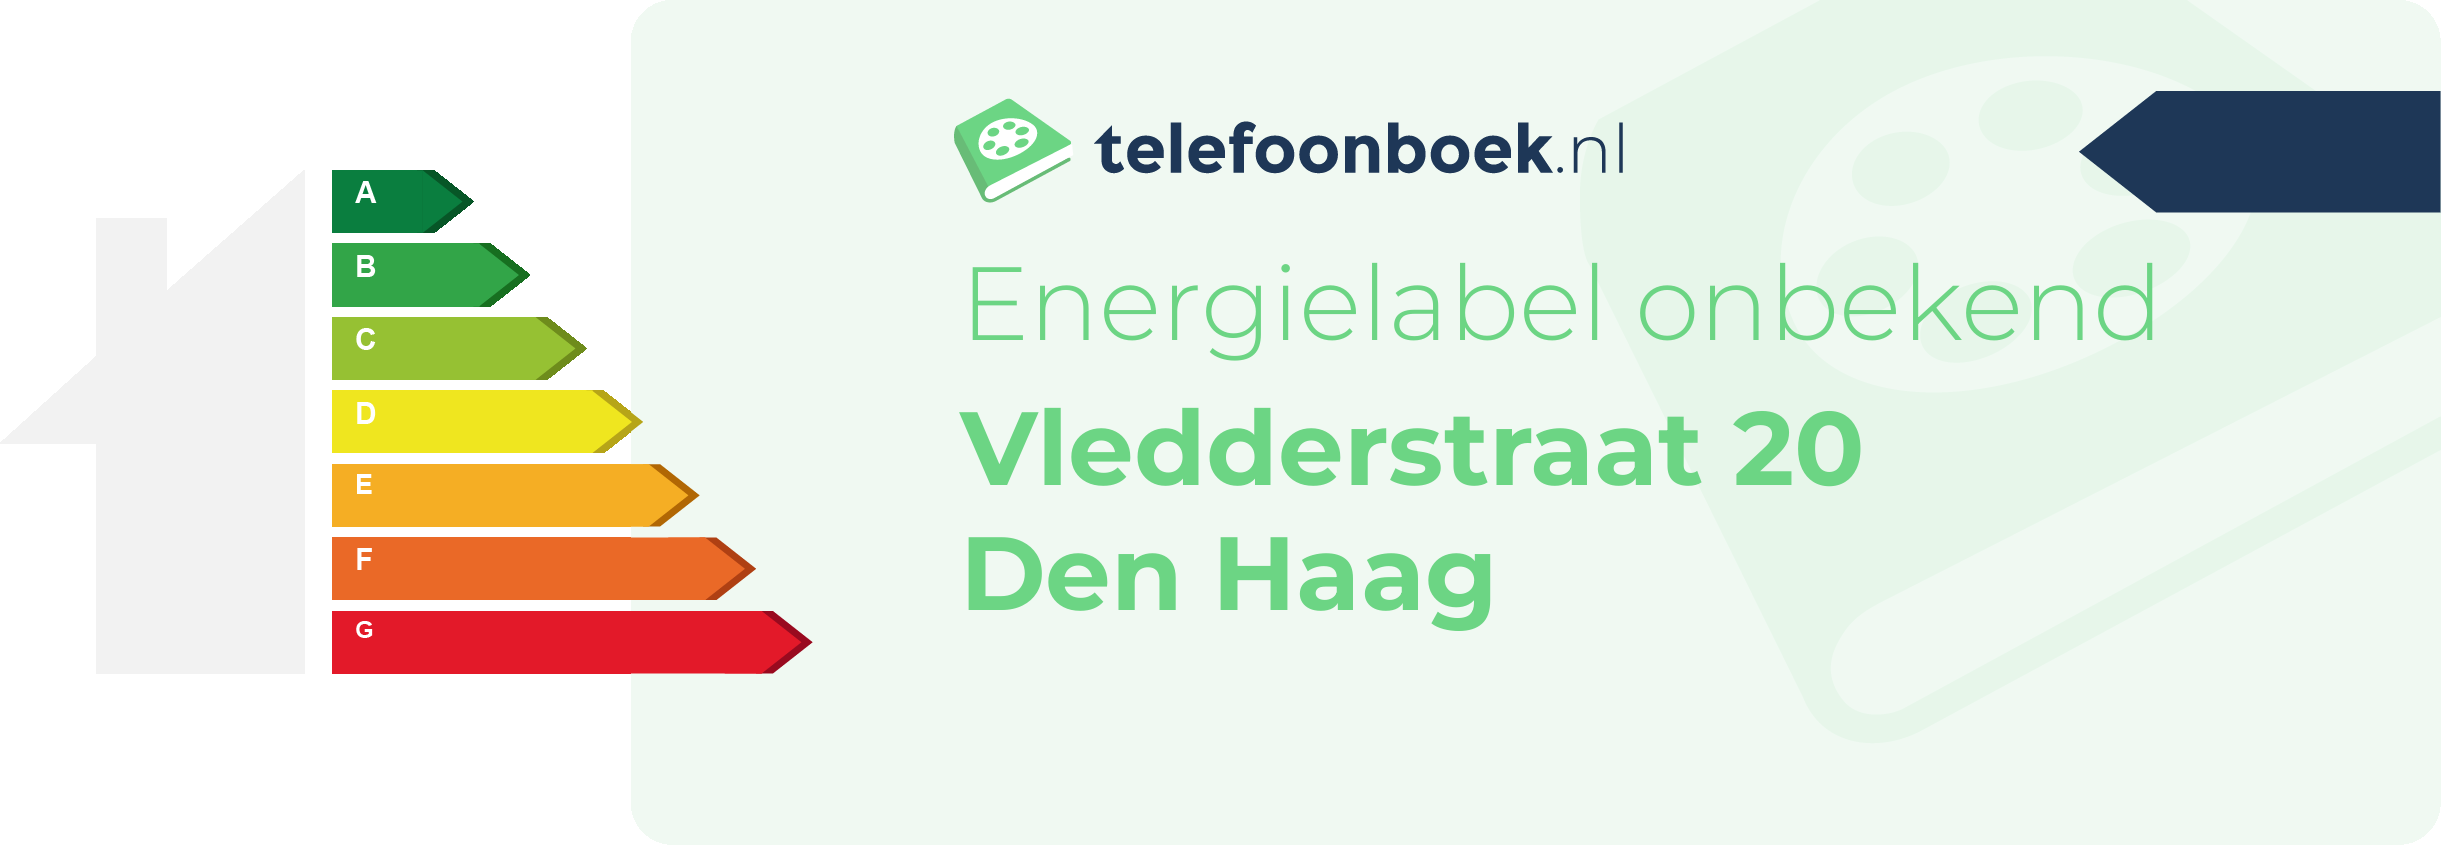 Energielabel Vledderstraat 20 Den Haag